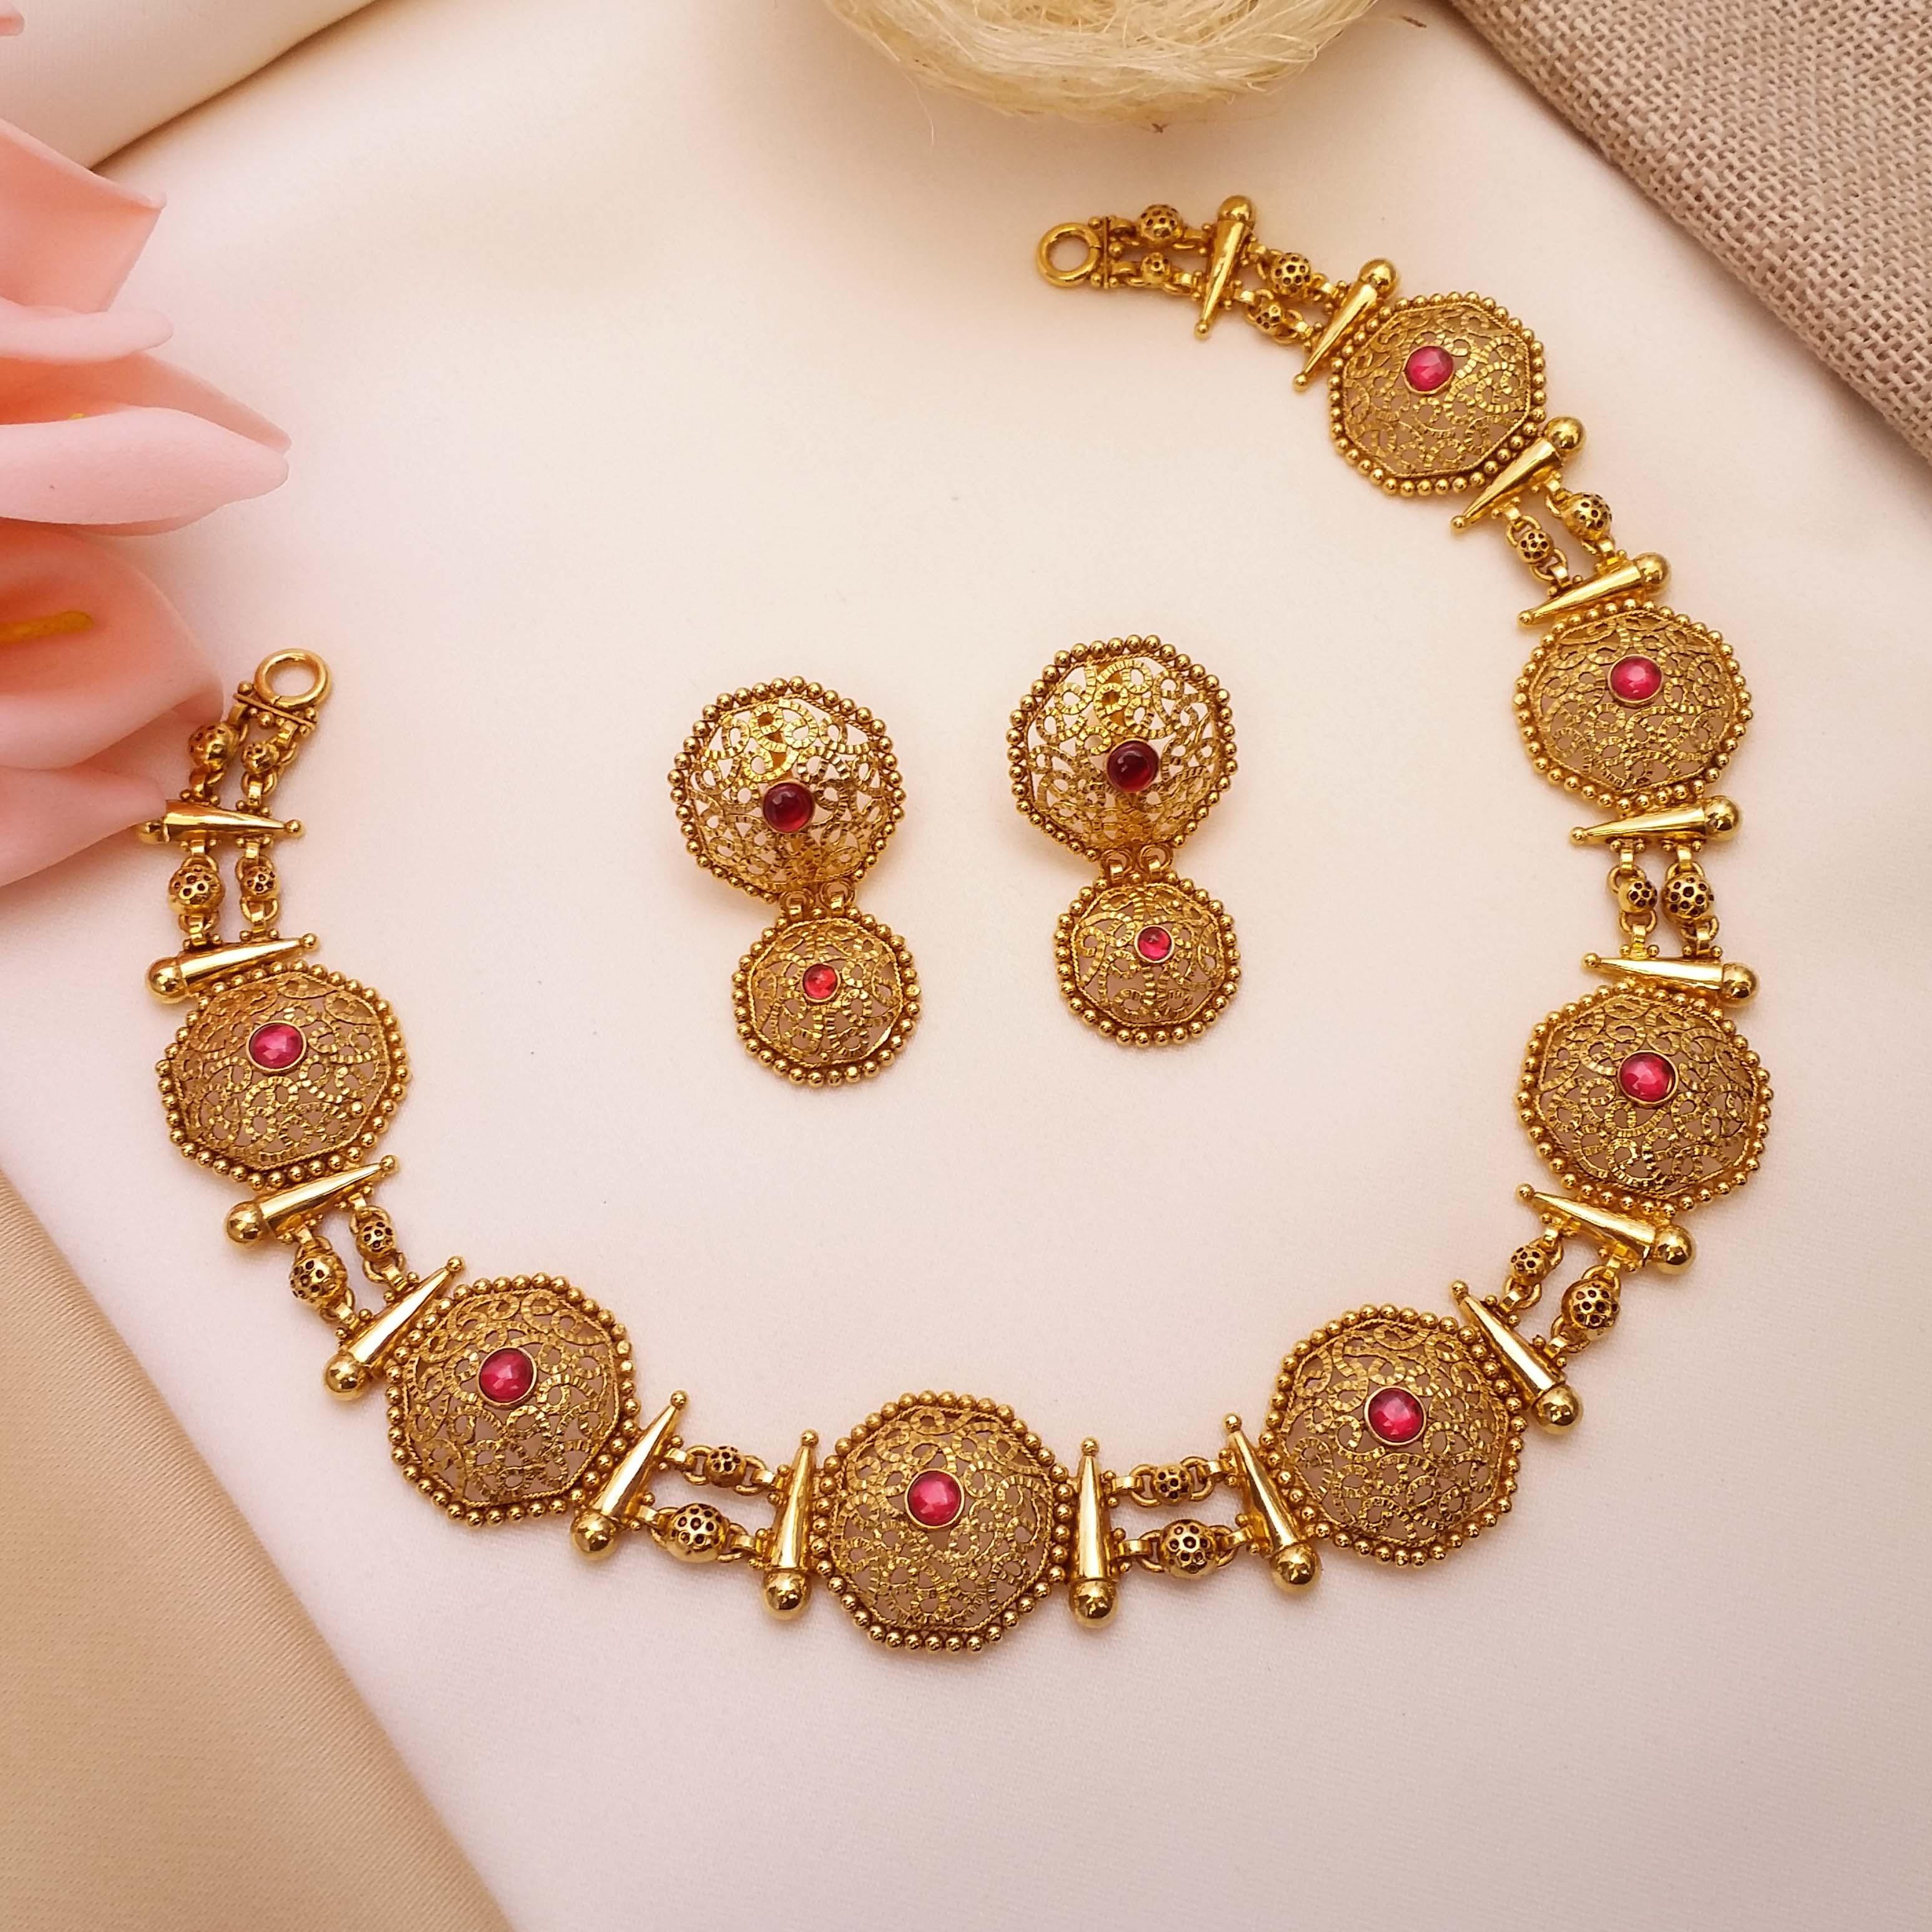 Spellbinding 22 Karat Yellow Gold Filigree Necklace And Earrings Set